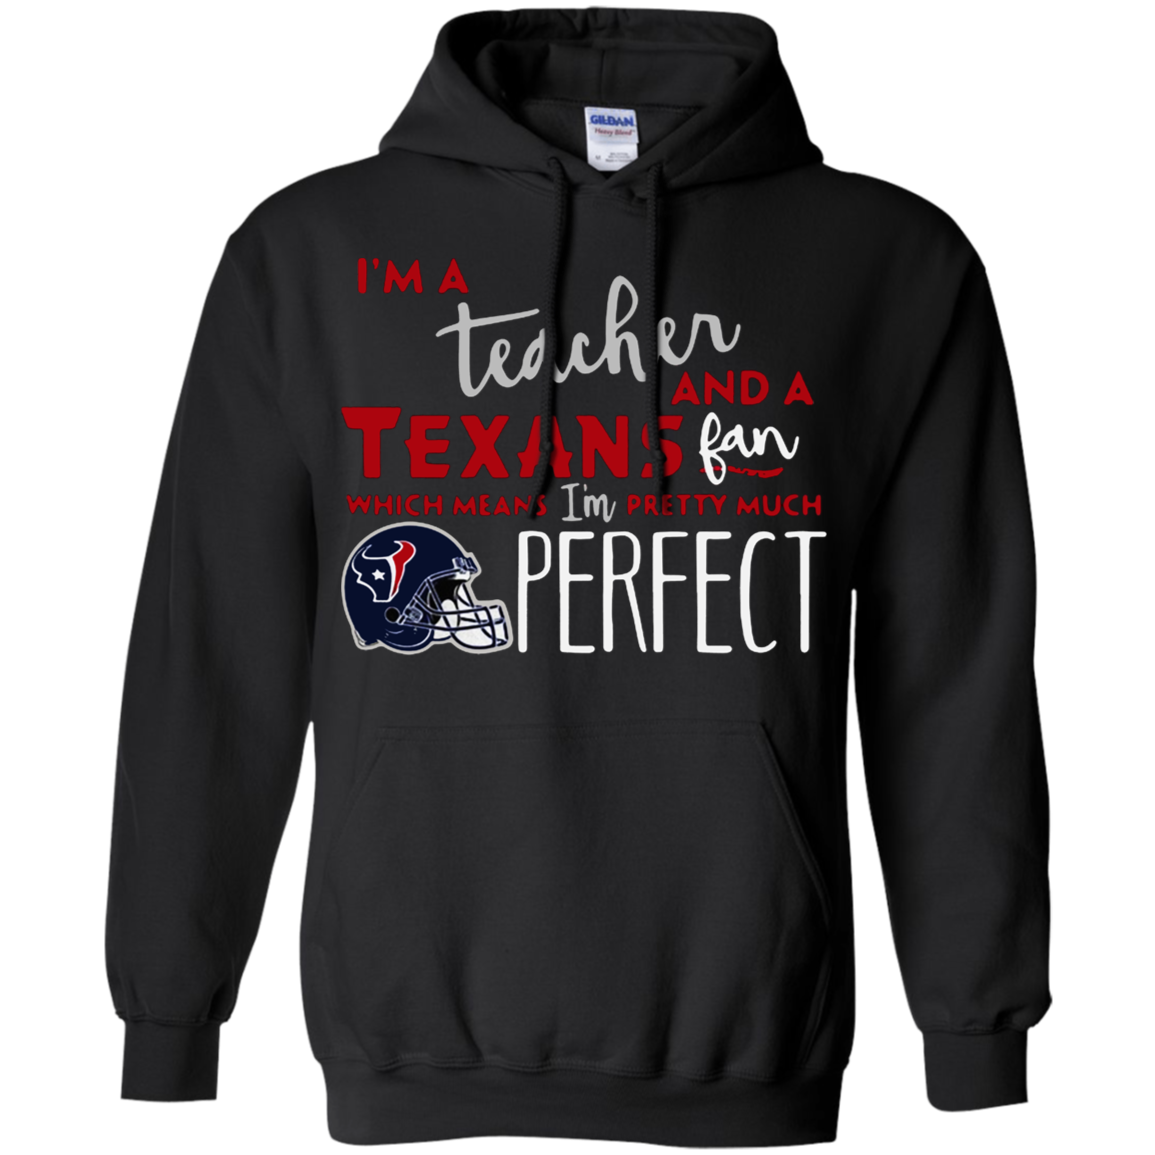 Iâ™m A Tea And A Houston Texans Fan Which Means Iâ™m Pretty Much Perfect Shirt G185 